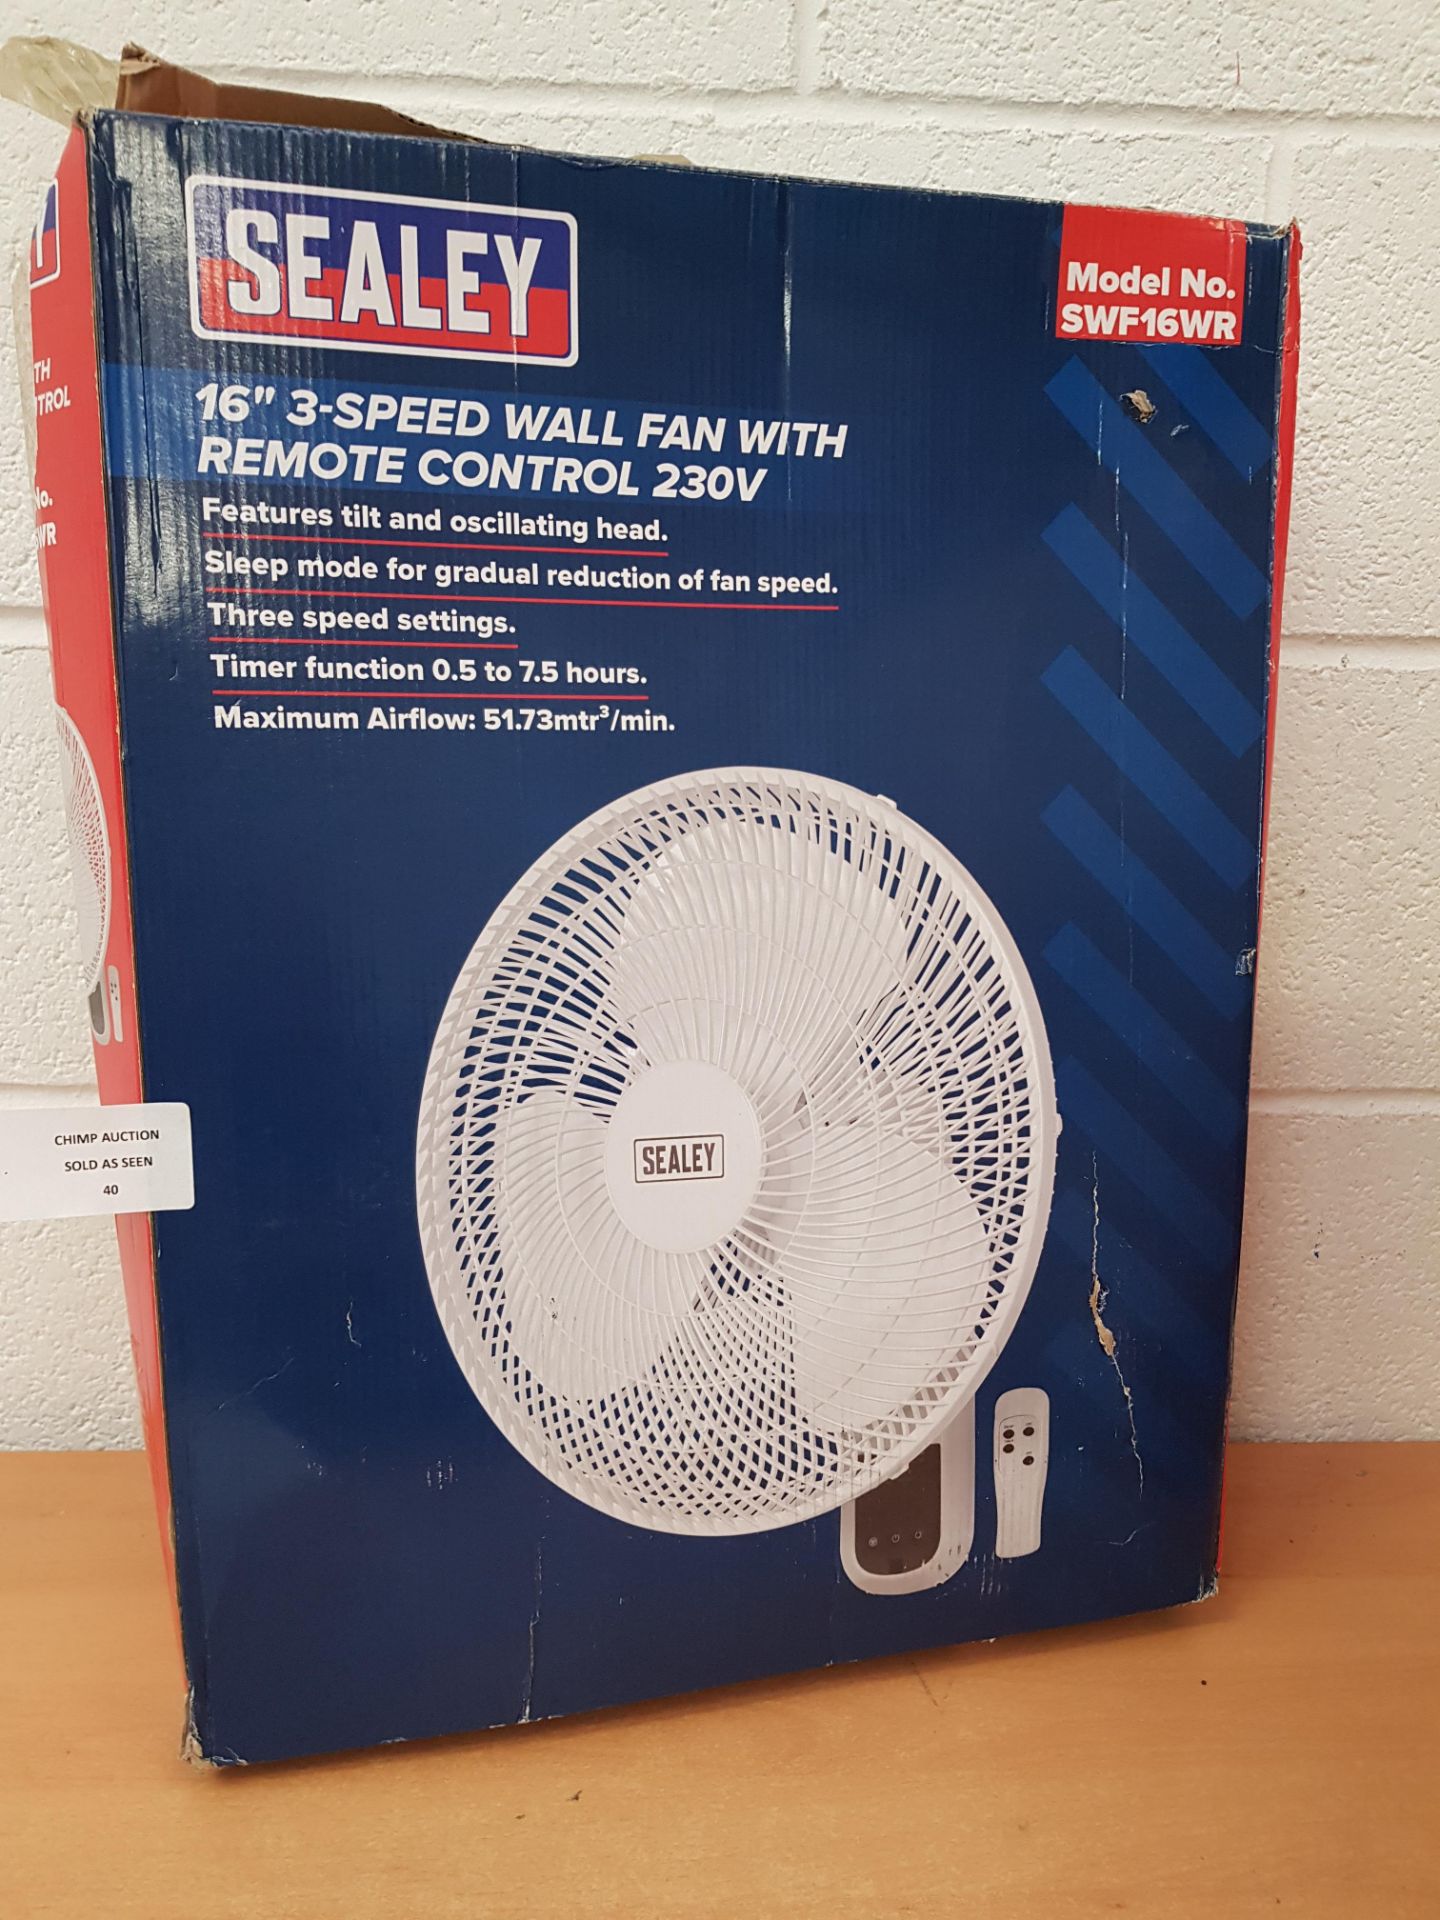 Sealey SWF16WR 16" 3-Speed Wall Fan Remote Control 230V RRP £59.99